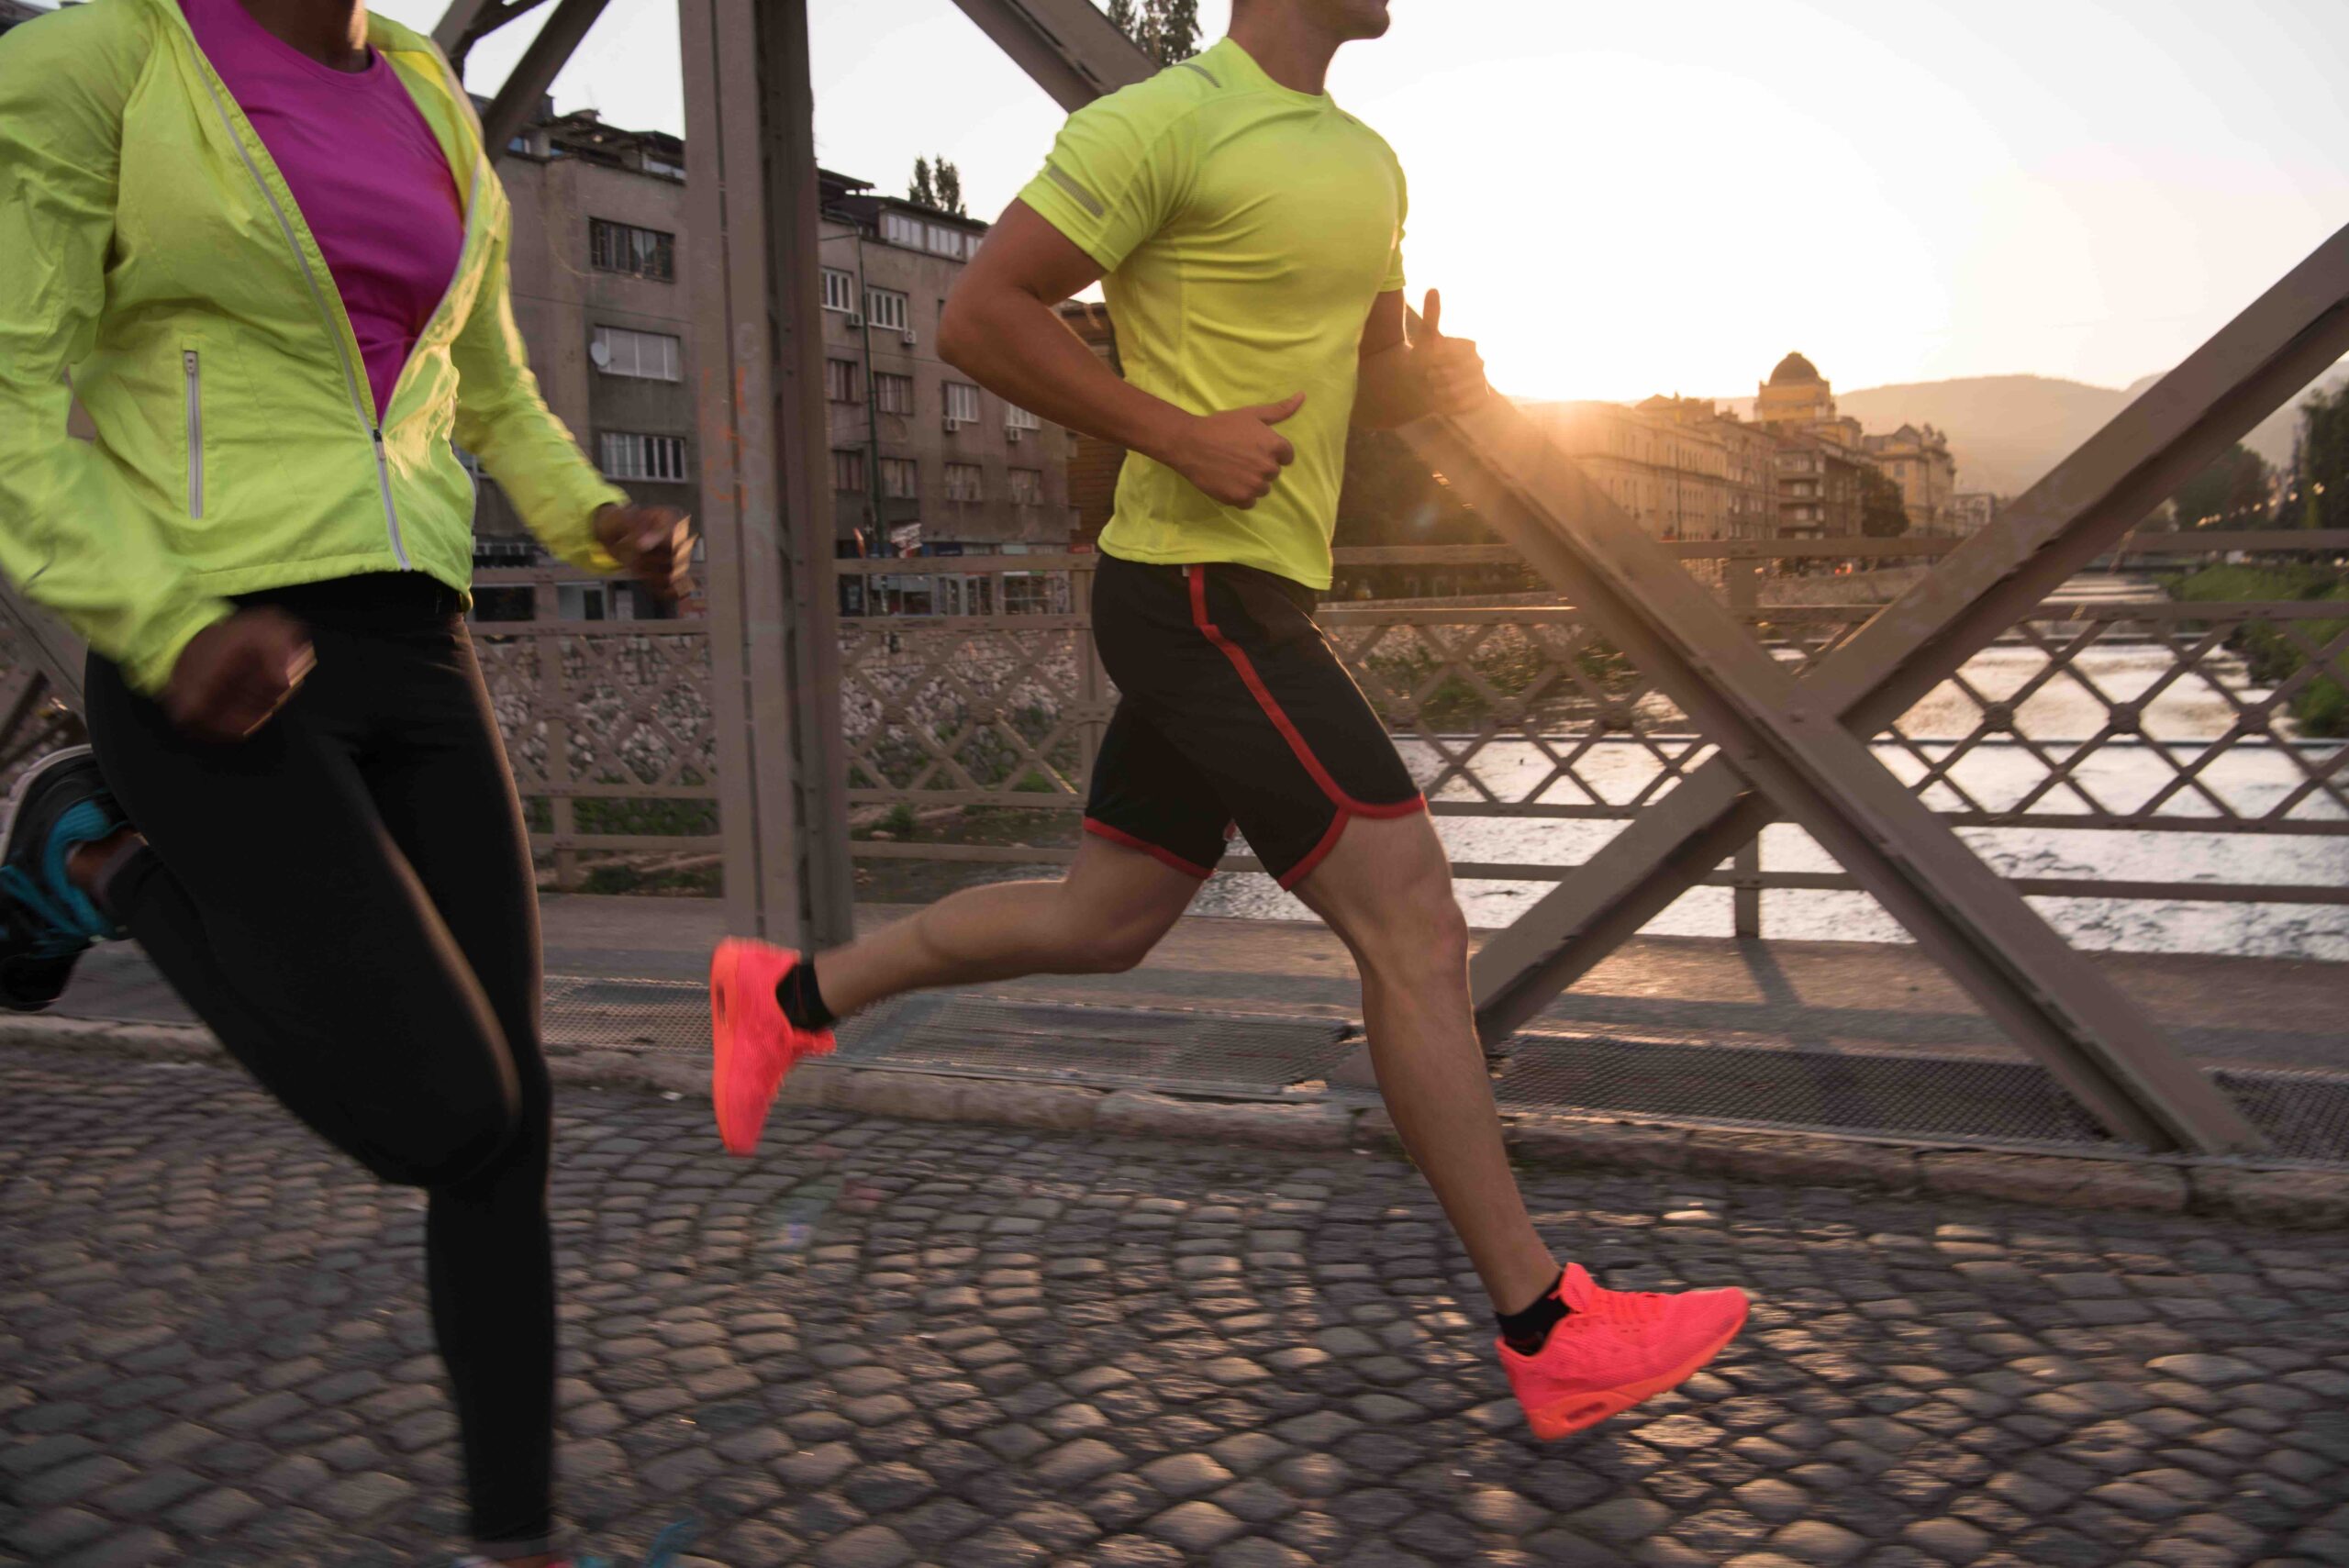 The optimal stride length when running